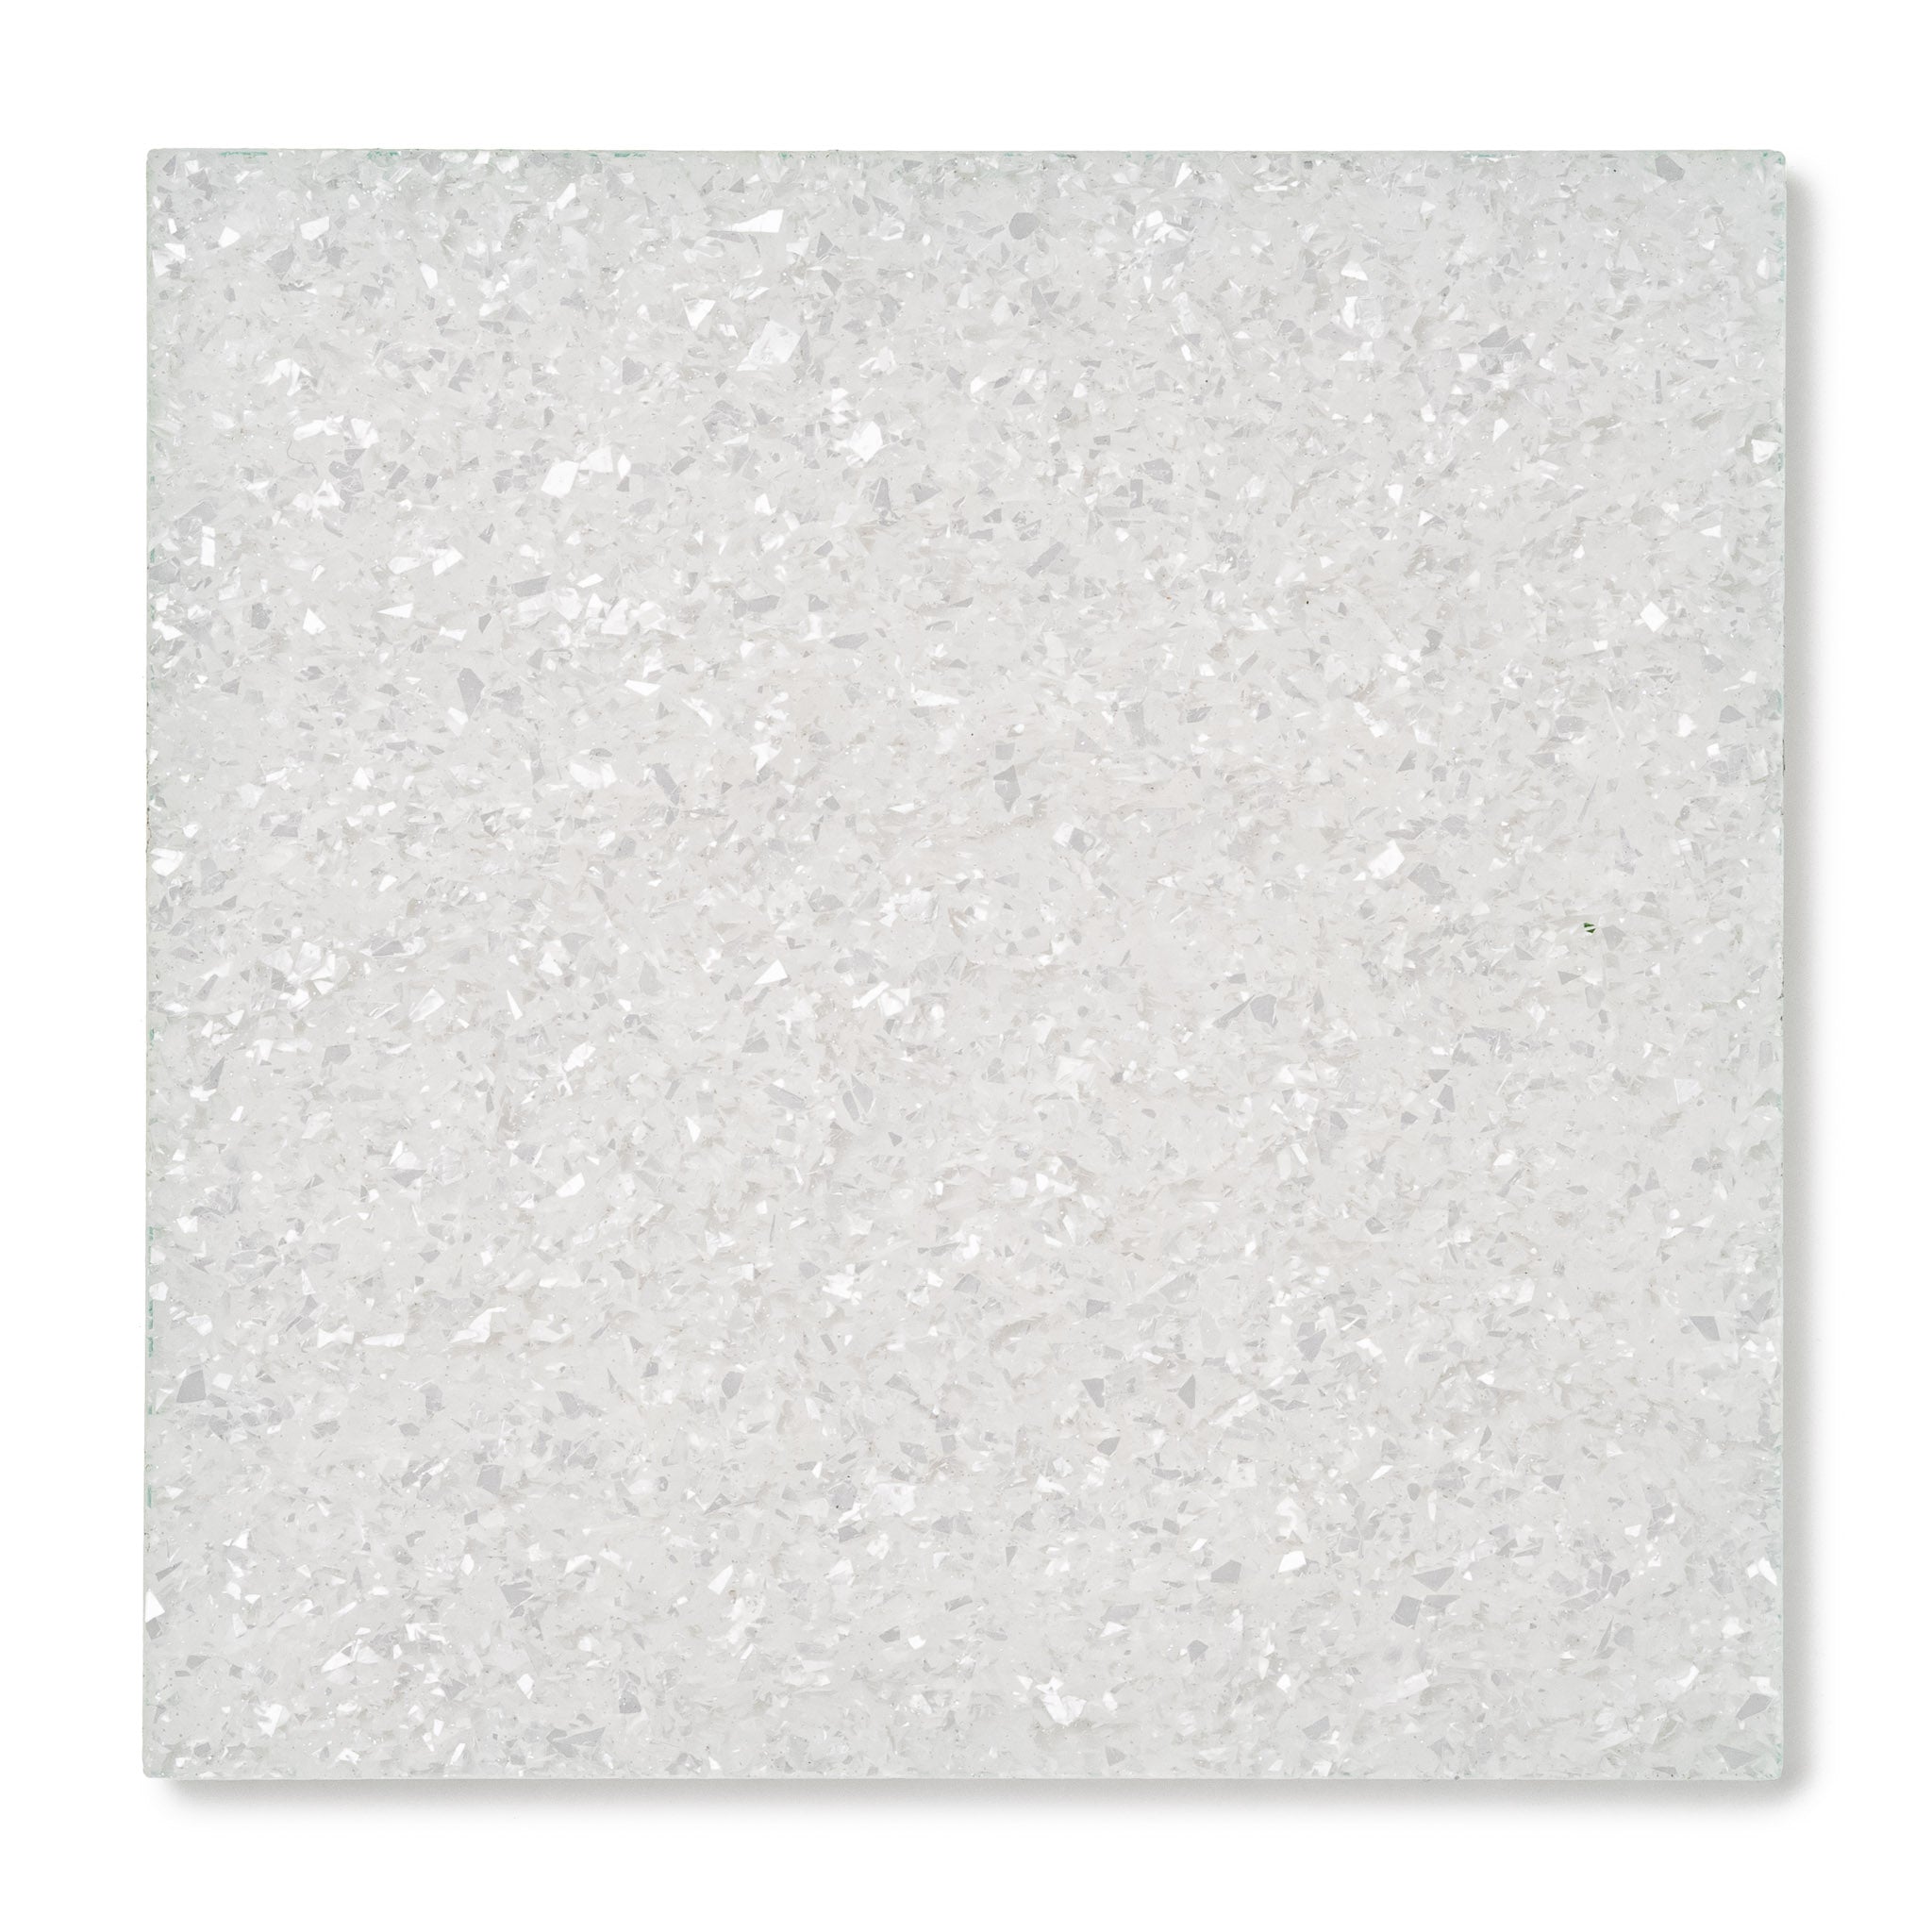 White Snow Flake Glitter Acrylic Sheet, Swatch View